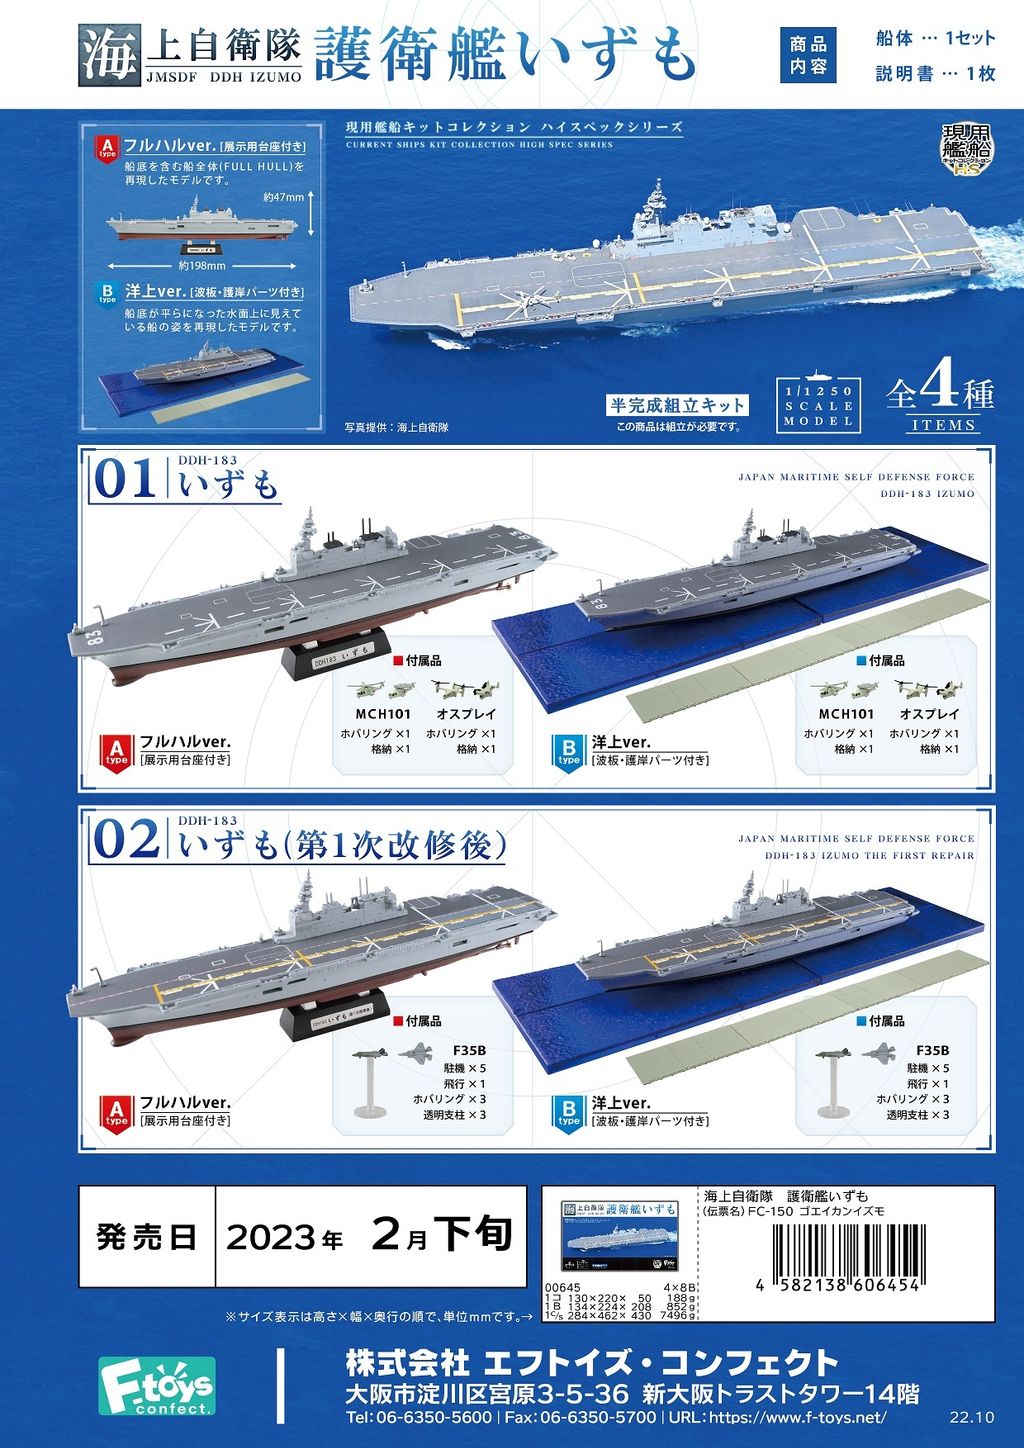 Japan Maritime Self-Defense Force DDH Izumo